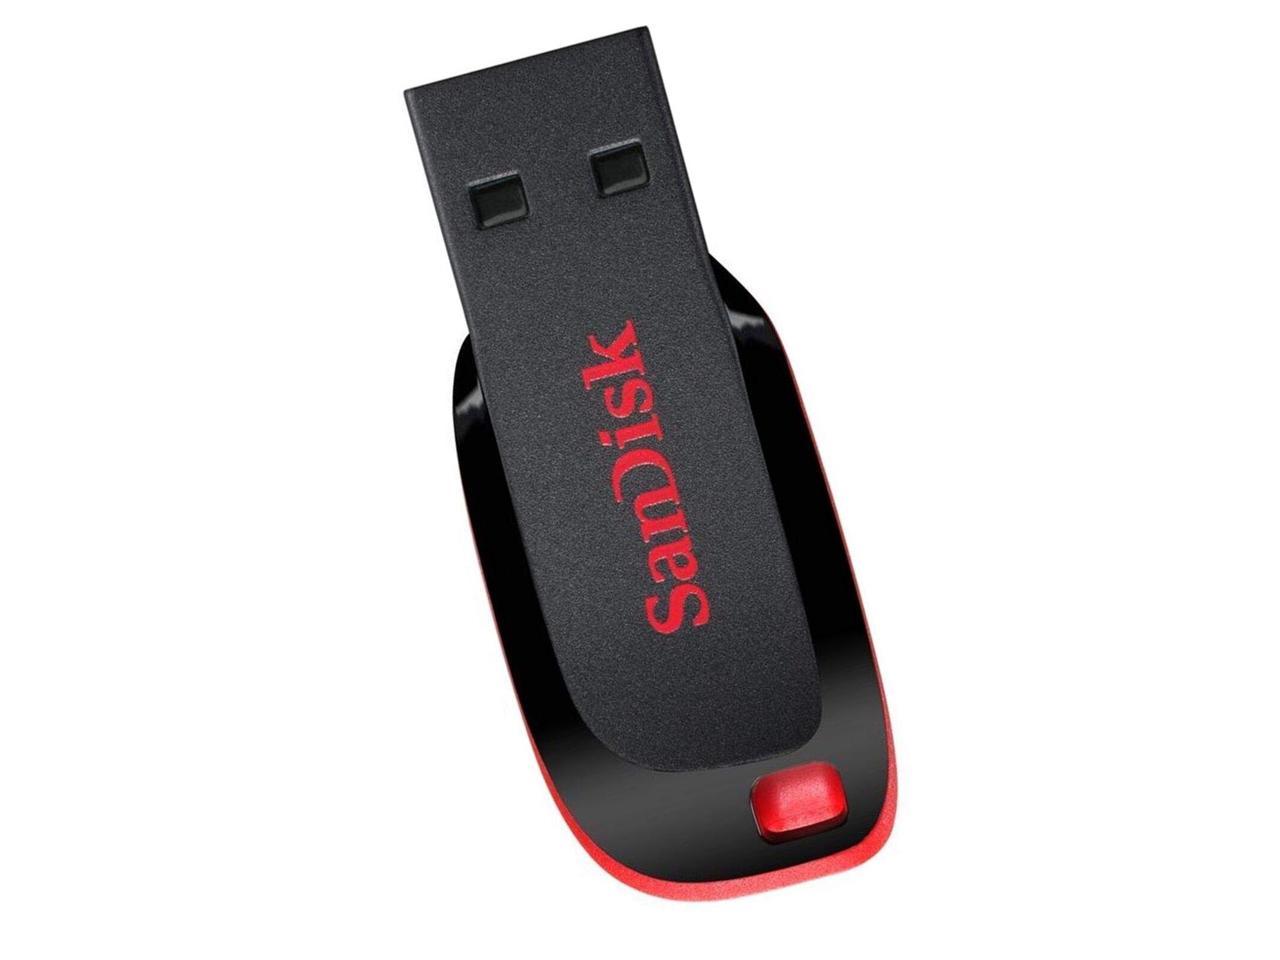 NEW SanDisk Cruzer 32GB BLADE USB Flash Pen Drive SDCZ50-032G 32 G RETAIL PACK